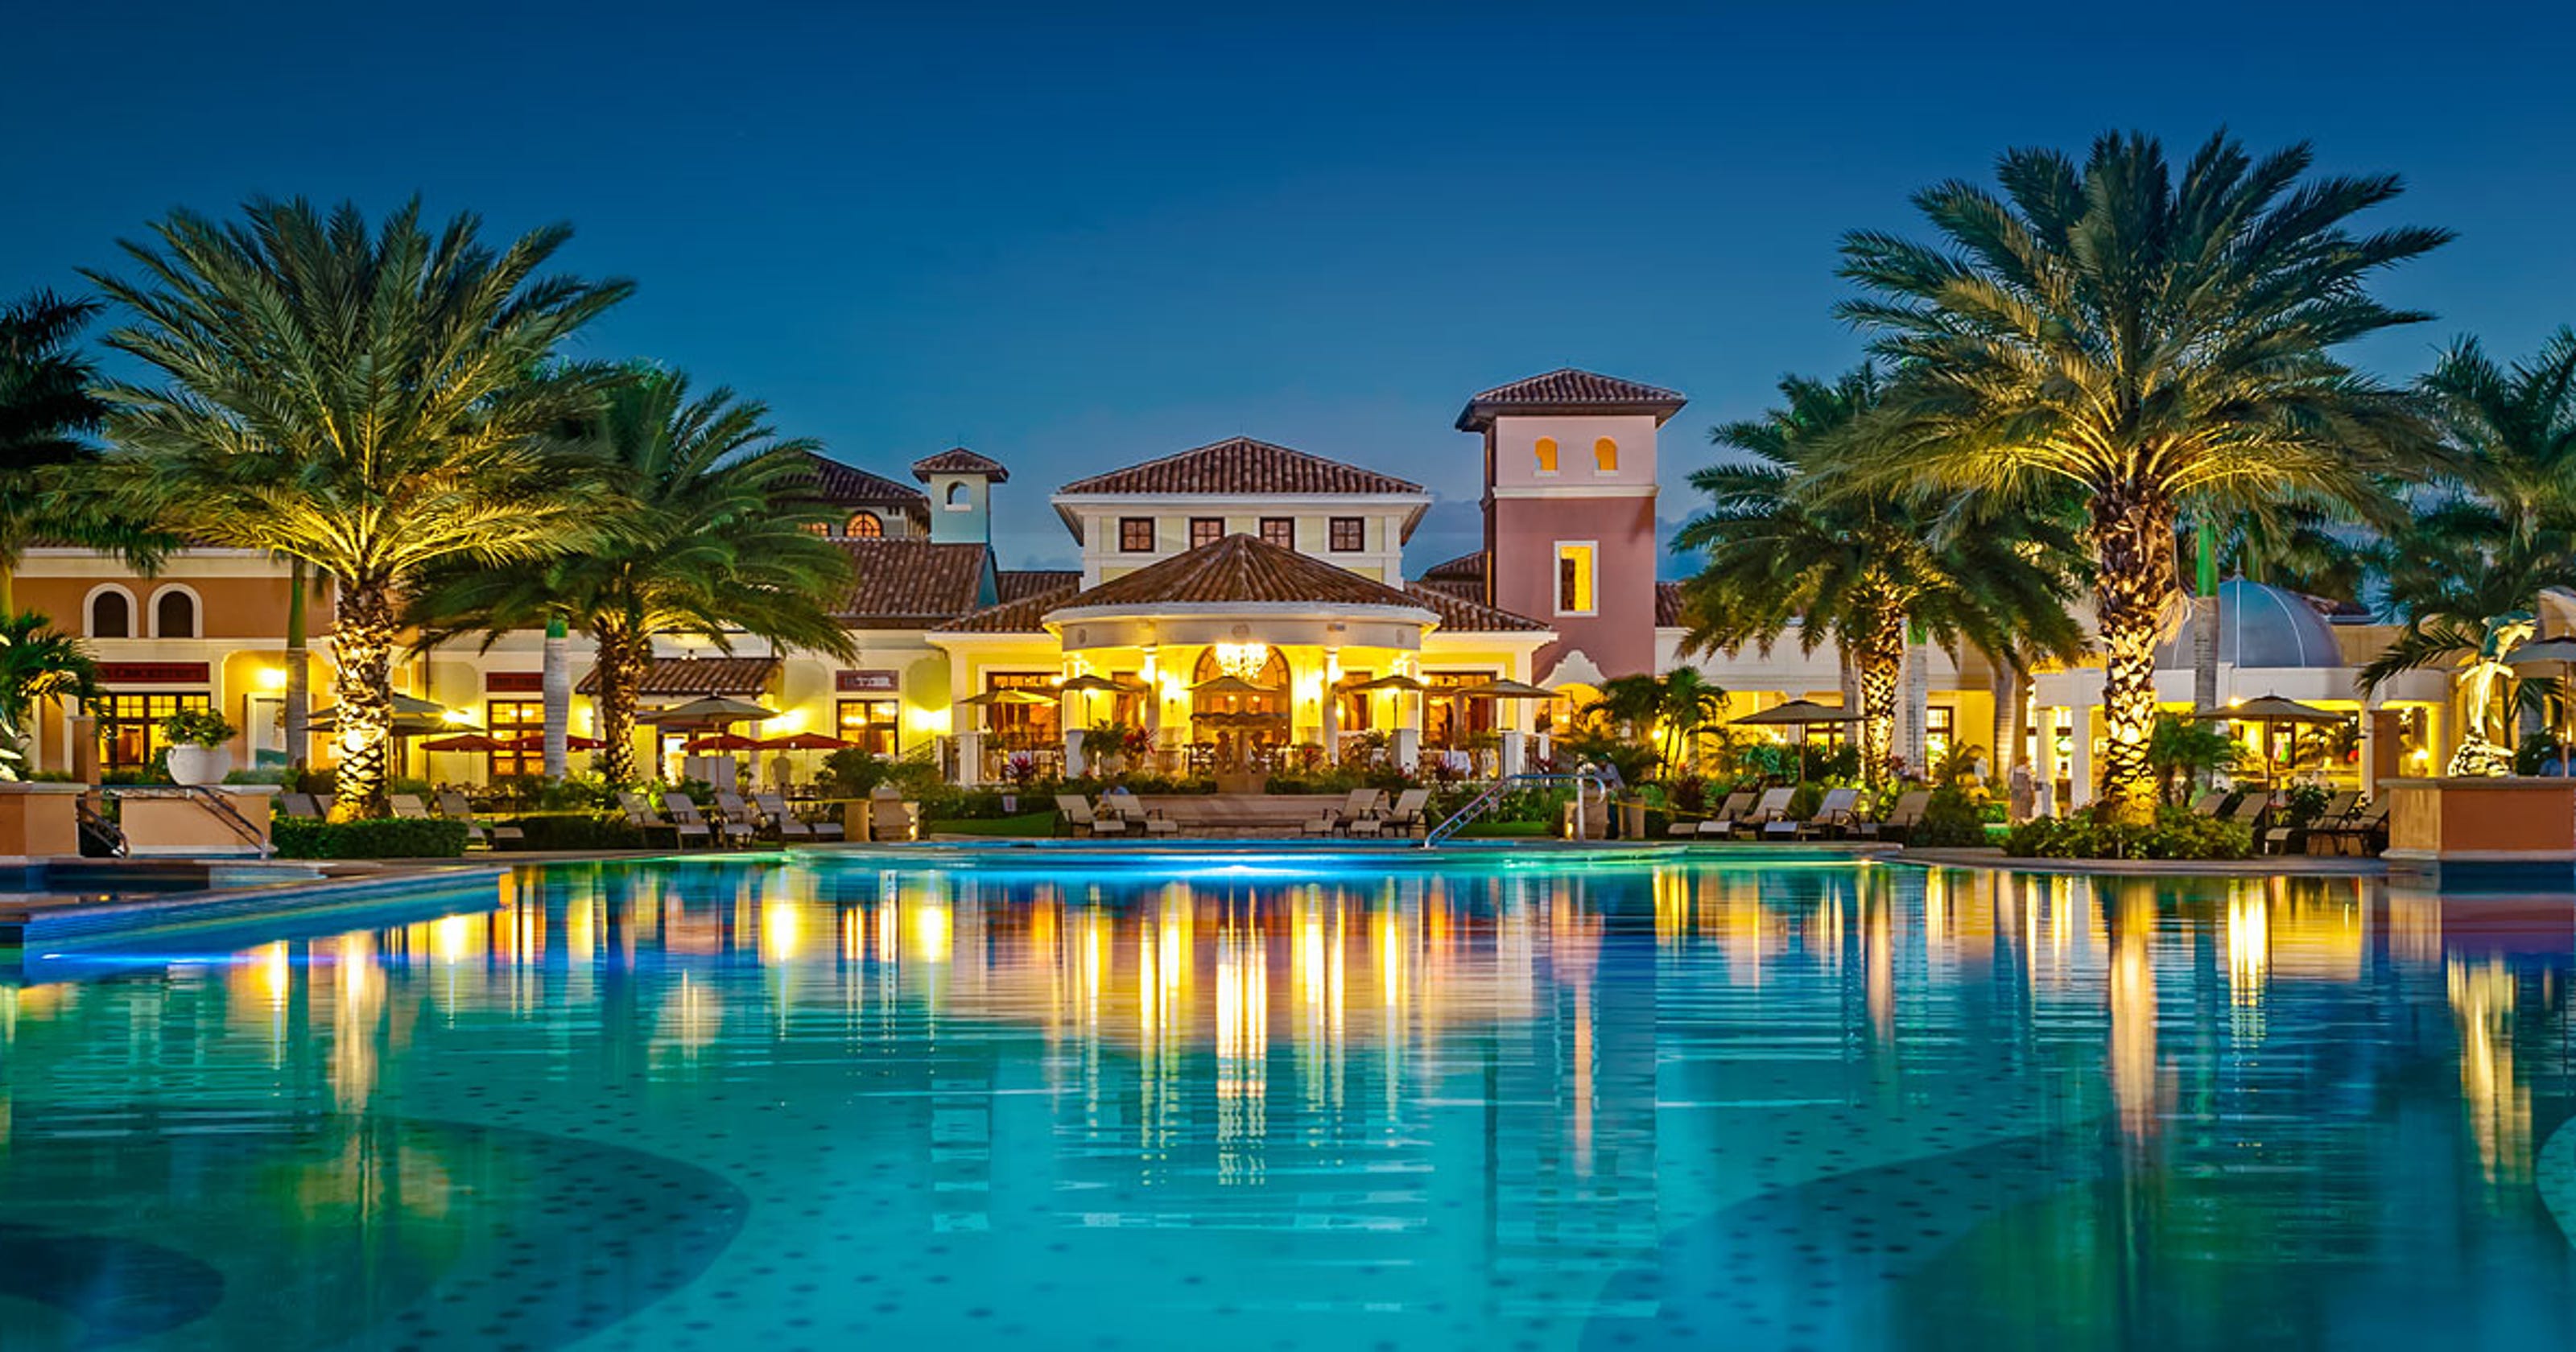 Caribbean All Inclusive Resorts Maximum Fun For The Money 